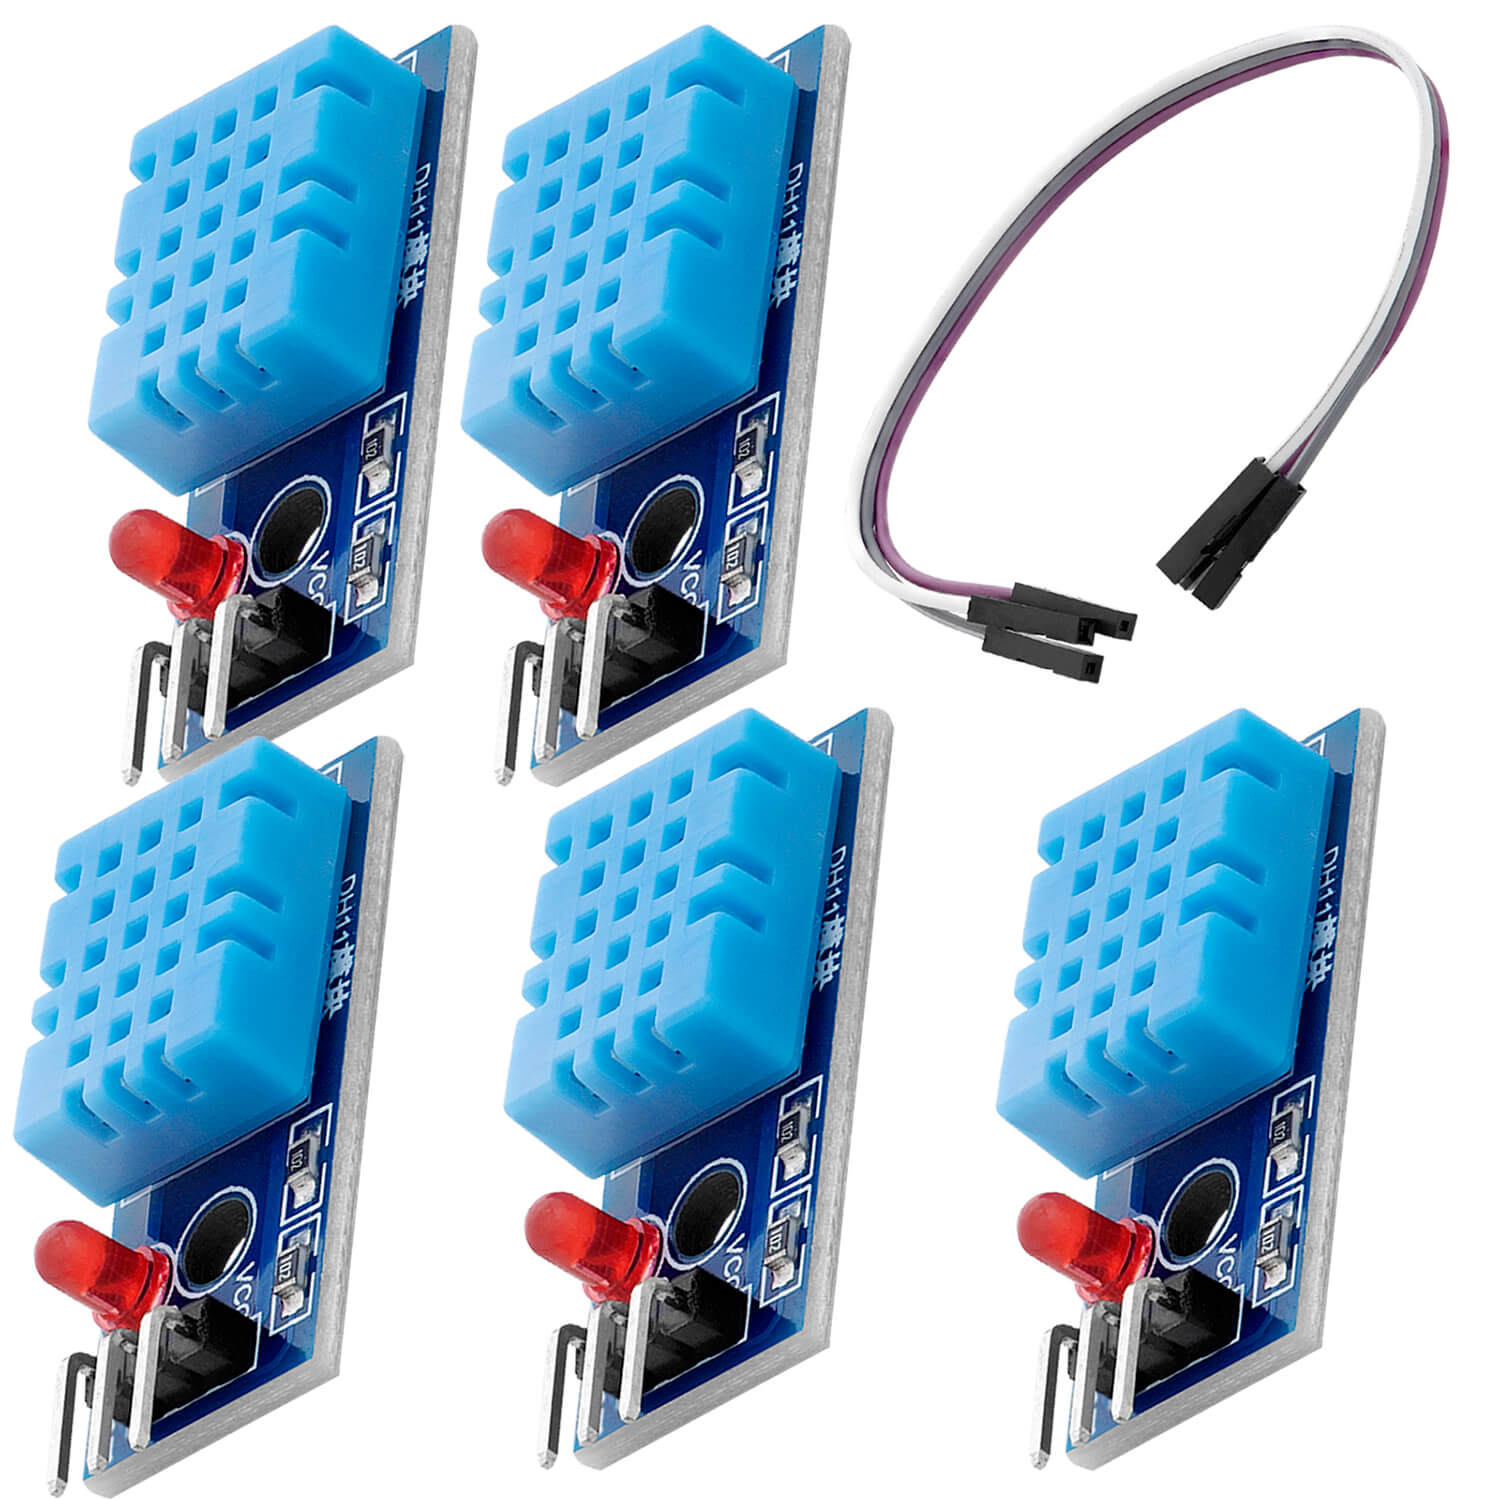 BOJACK DHT11 Temperature Humidity Sensor Module Digital Temperature  Humidity Sensor 3.3V-5V with Wires for Arduino Raspberry Pi 2 3 (Pack of  2Pcs)